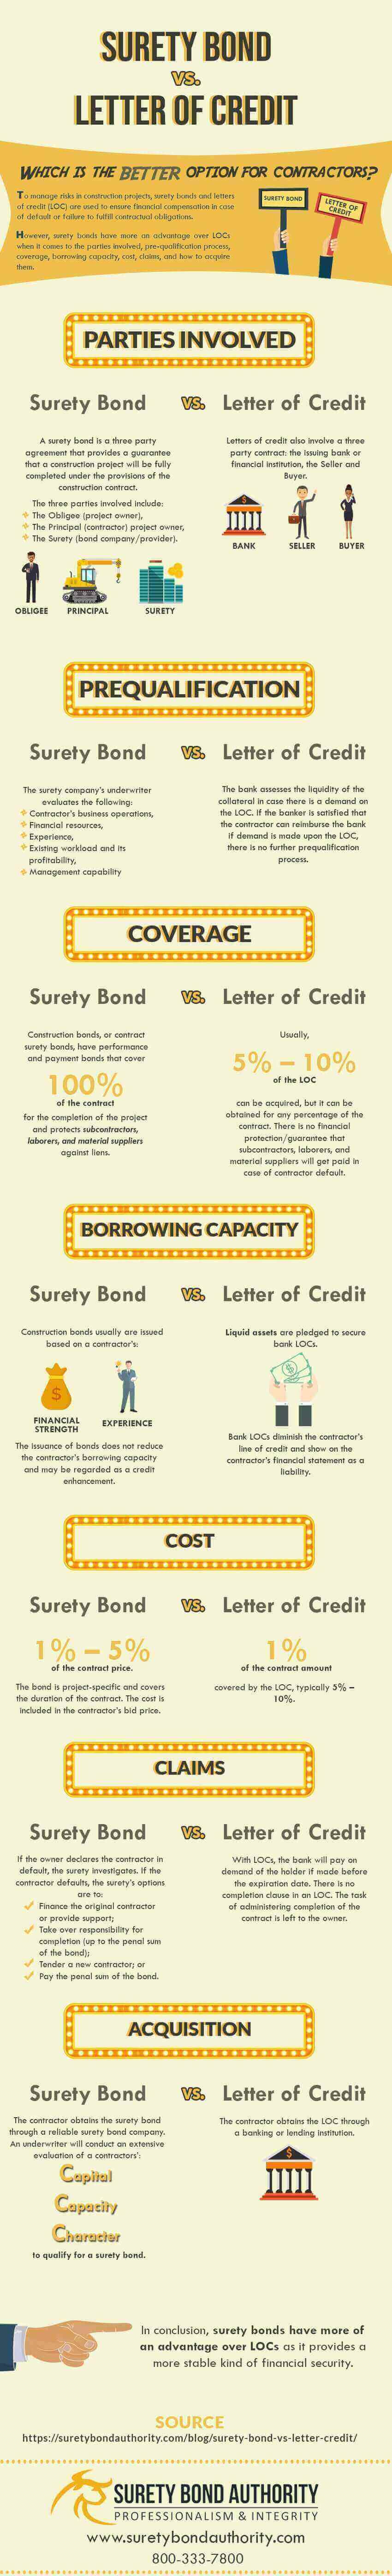 Surety Bond vs LOC Infographic